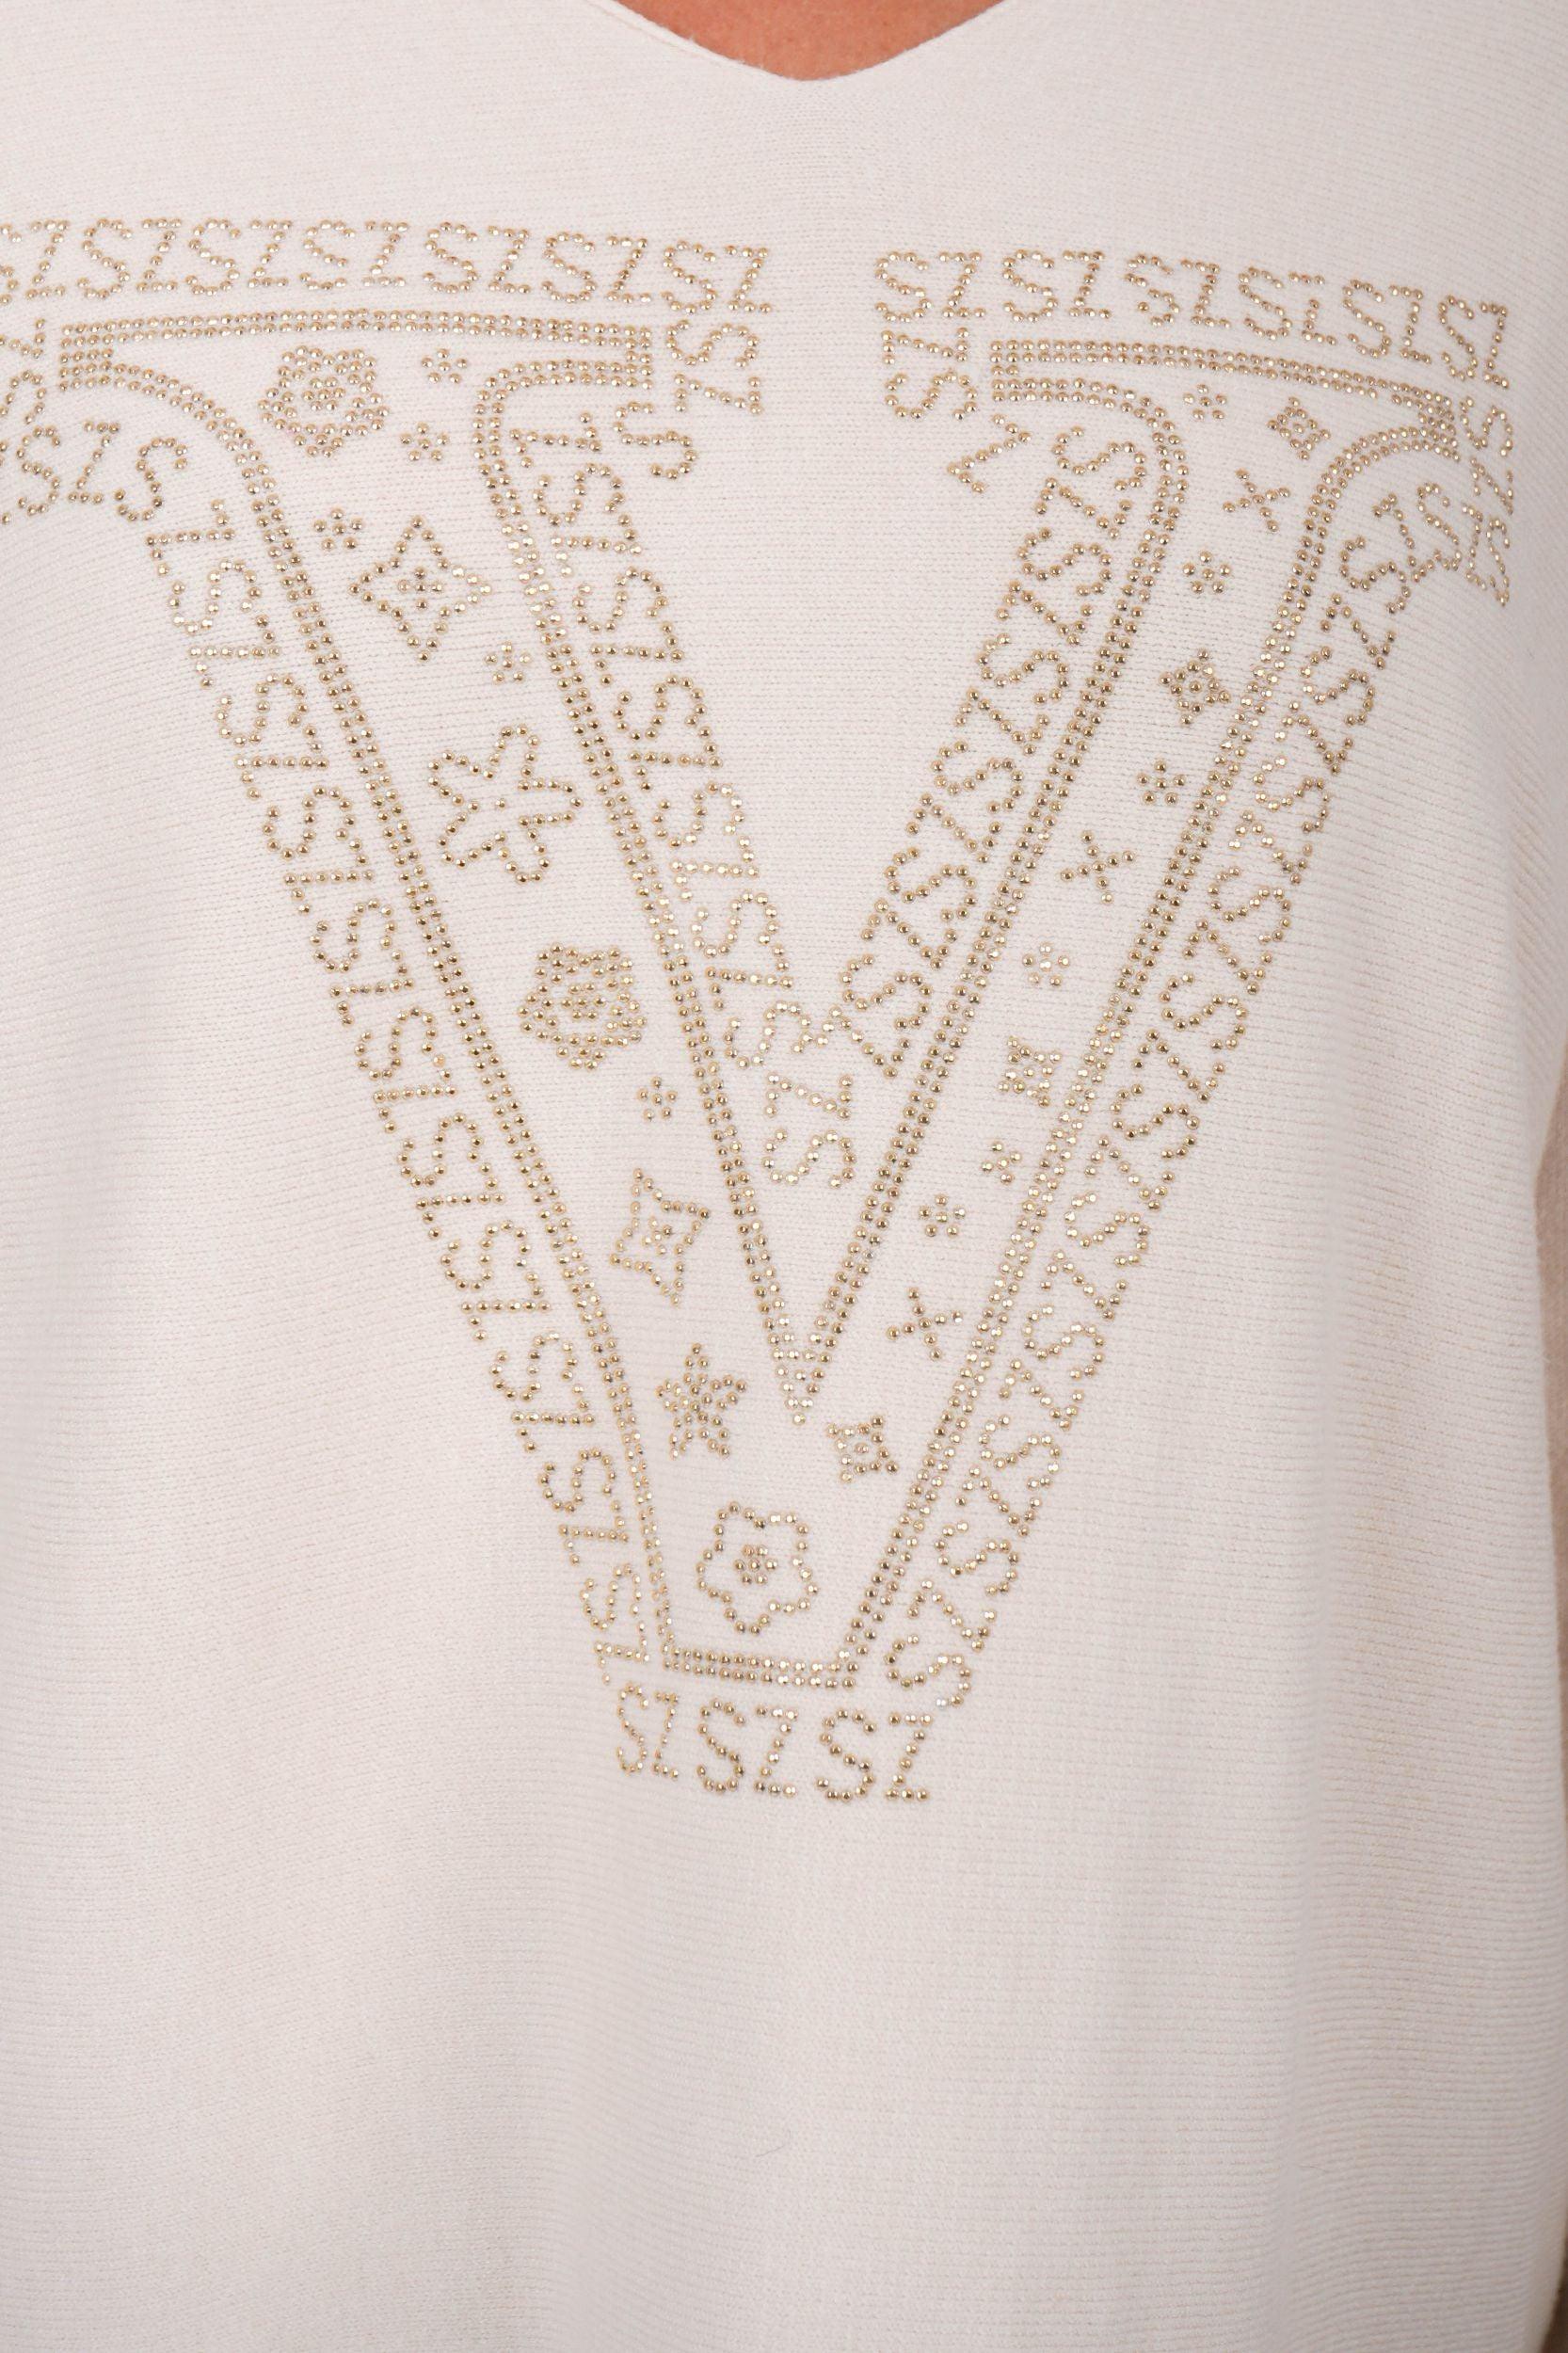 Pullover mit Print "V" - La Strada